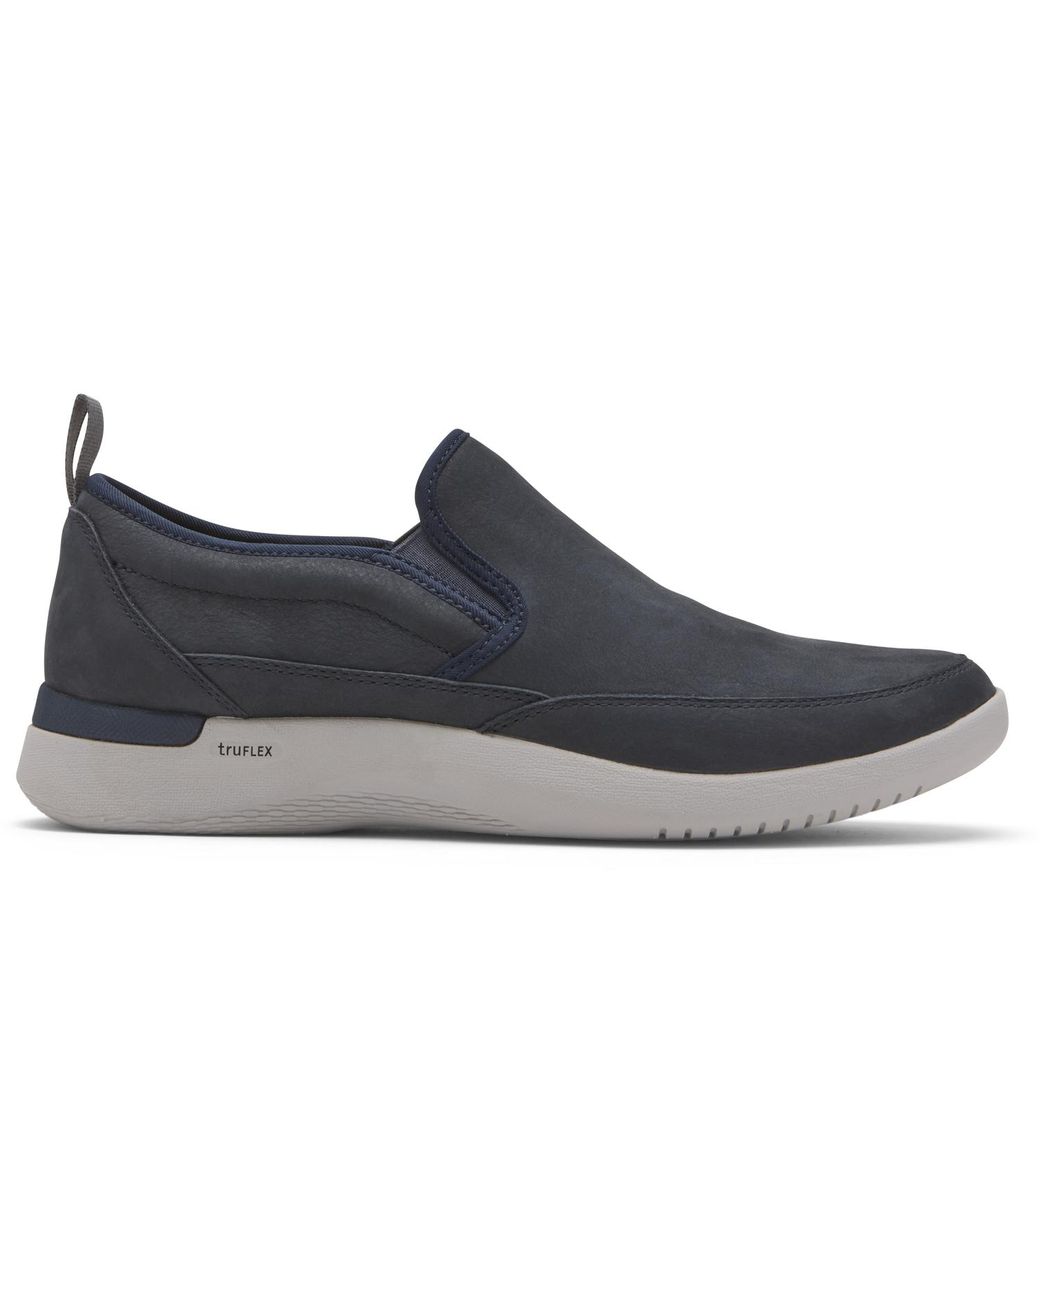 Rockport Mens Truflex Fly Slip-on - Size 7 M - Most Comfortable Shoe ...